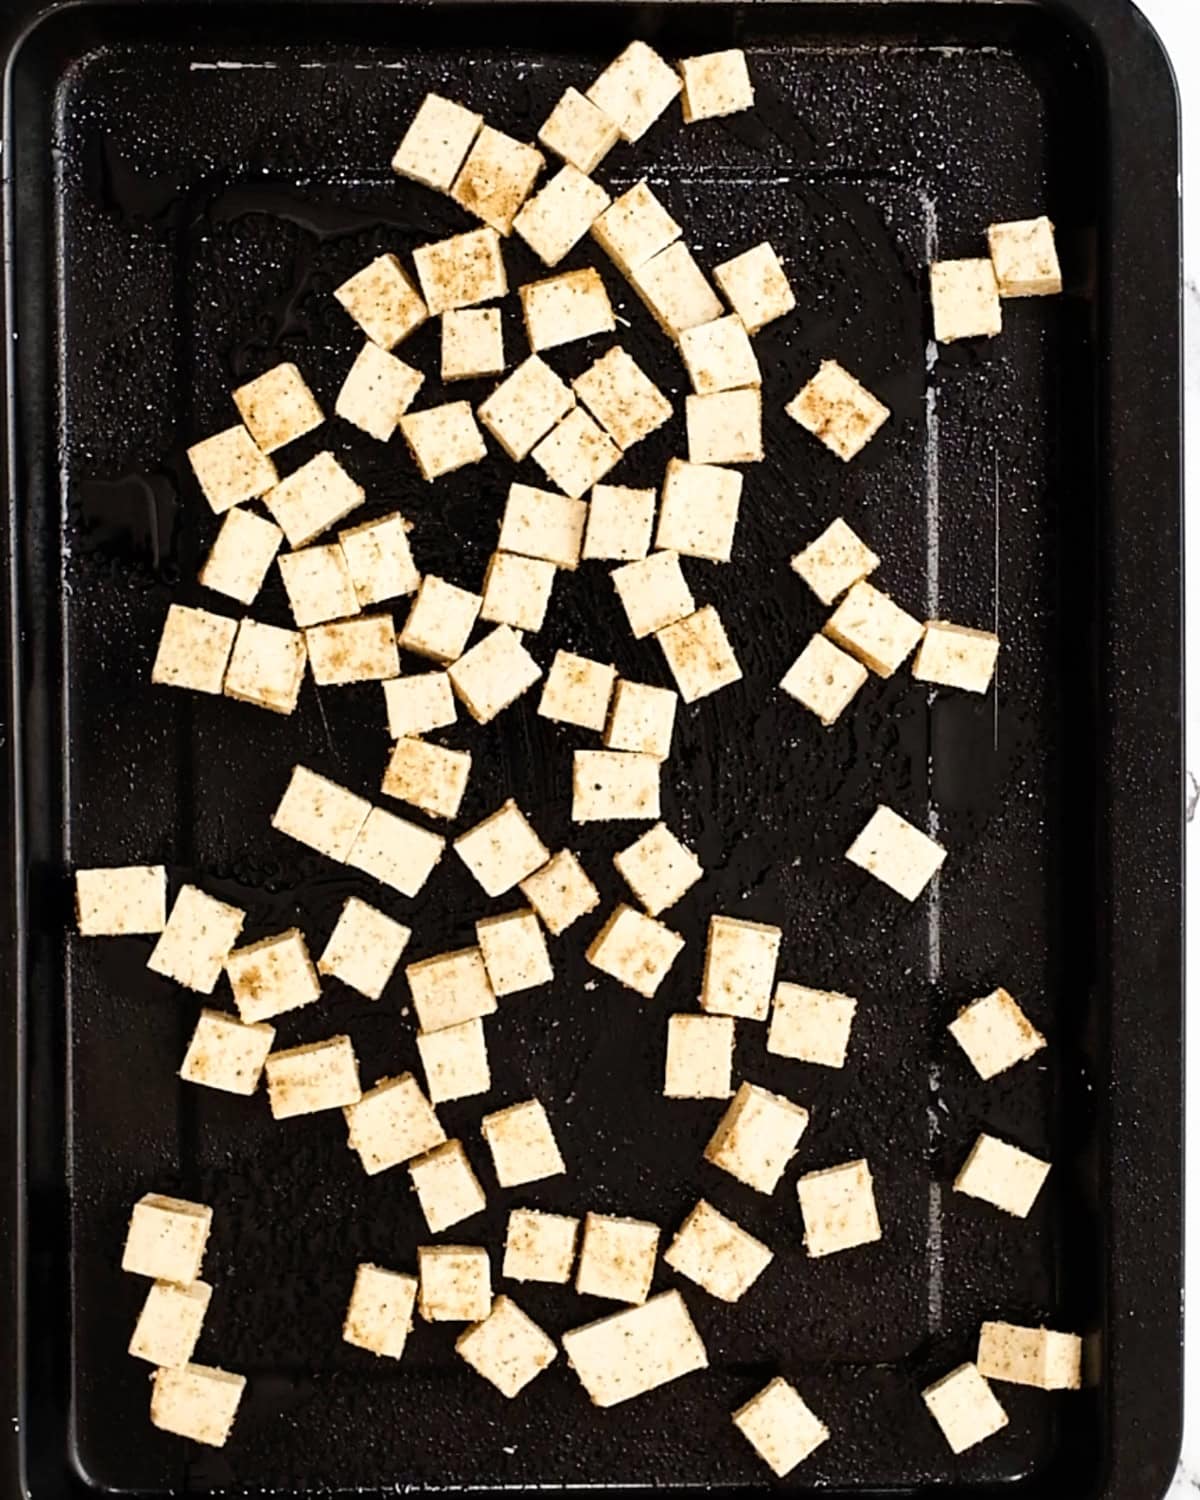 How to Make Baked Crispy Tofu - tofu on baking pan before baking